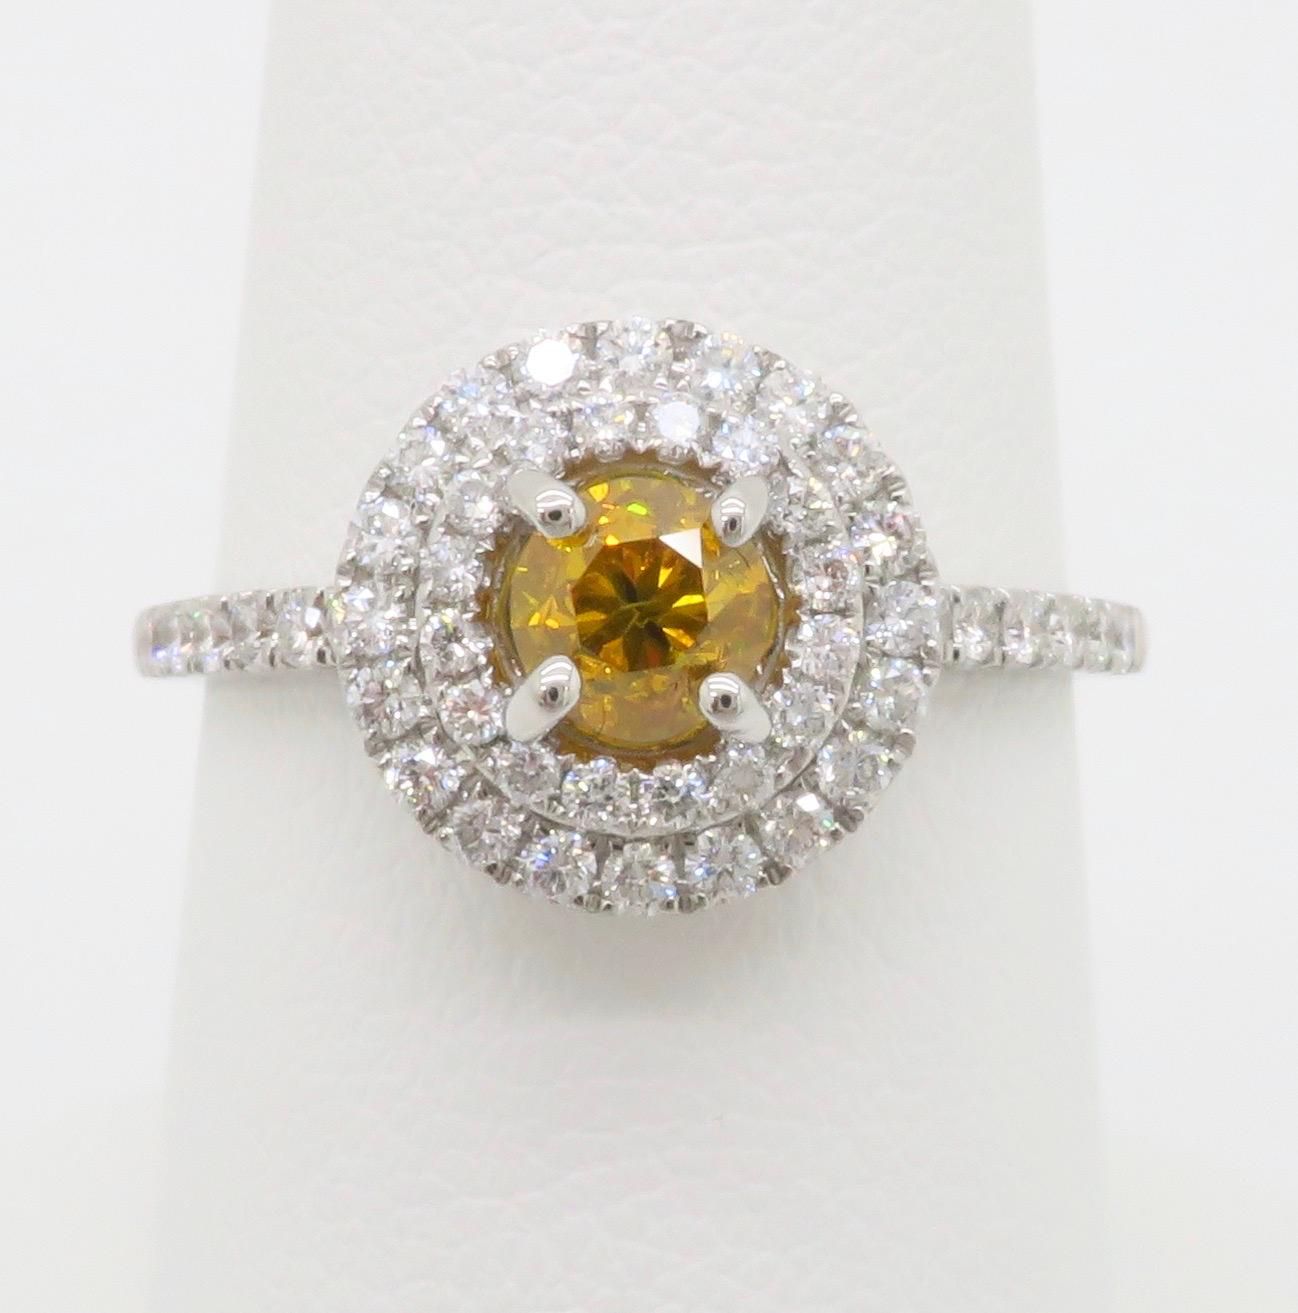 Stunning GIA Certified Fancy Vivid Yellow-Orange diamond set in a beautiful double halo diamond ring. 

Center Diamond Carat Weight: .51CT
Center Diamond Cut: Round Brilliant cut 
Center Diamond Color: Fancy Vivid Yellow-Orange 
Center Diamond